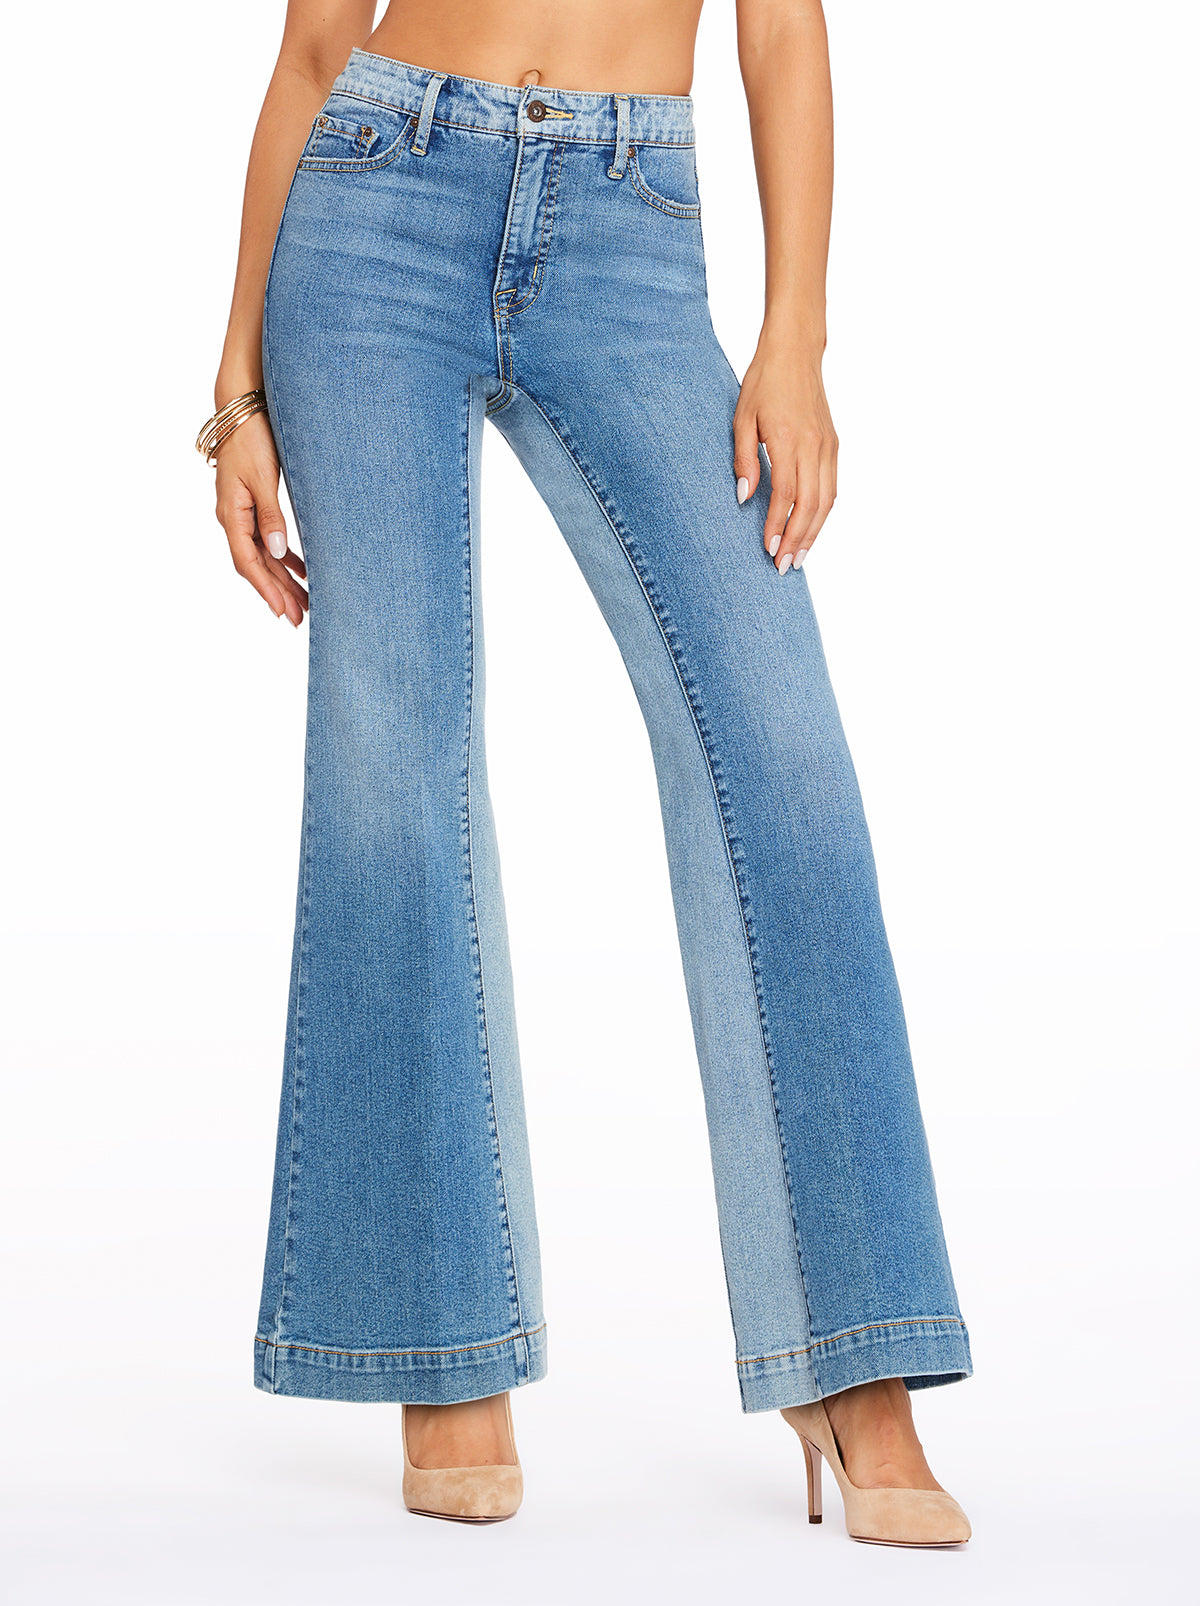 Jessica Simpson jeans : r/PetiteFashionAdvice